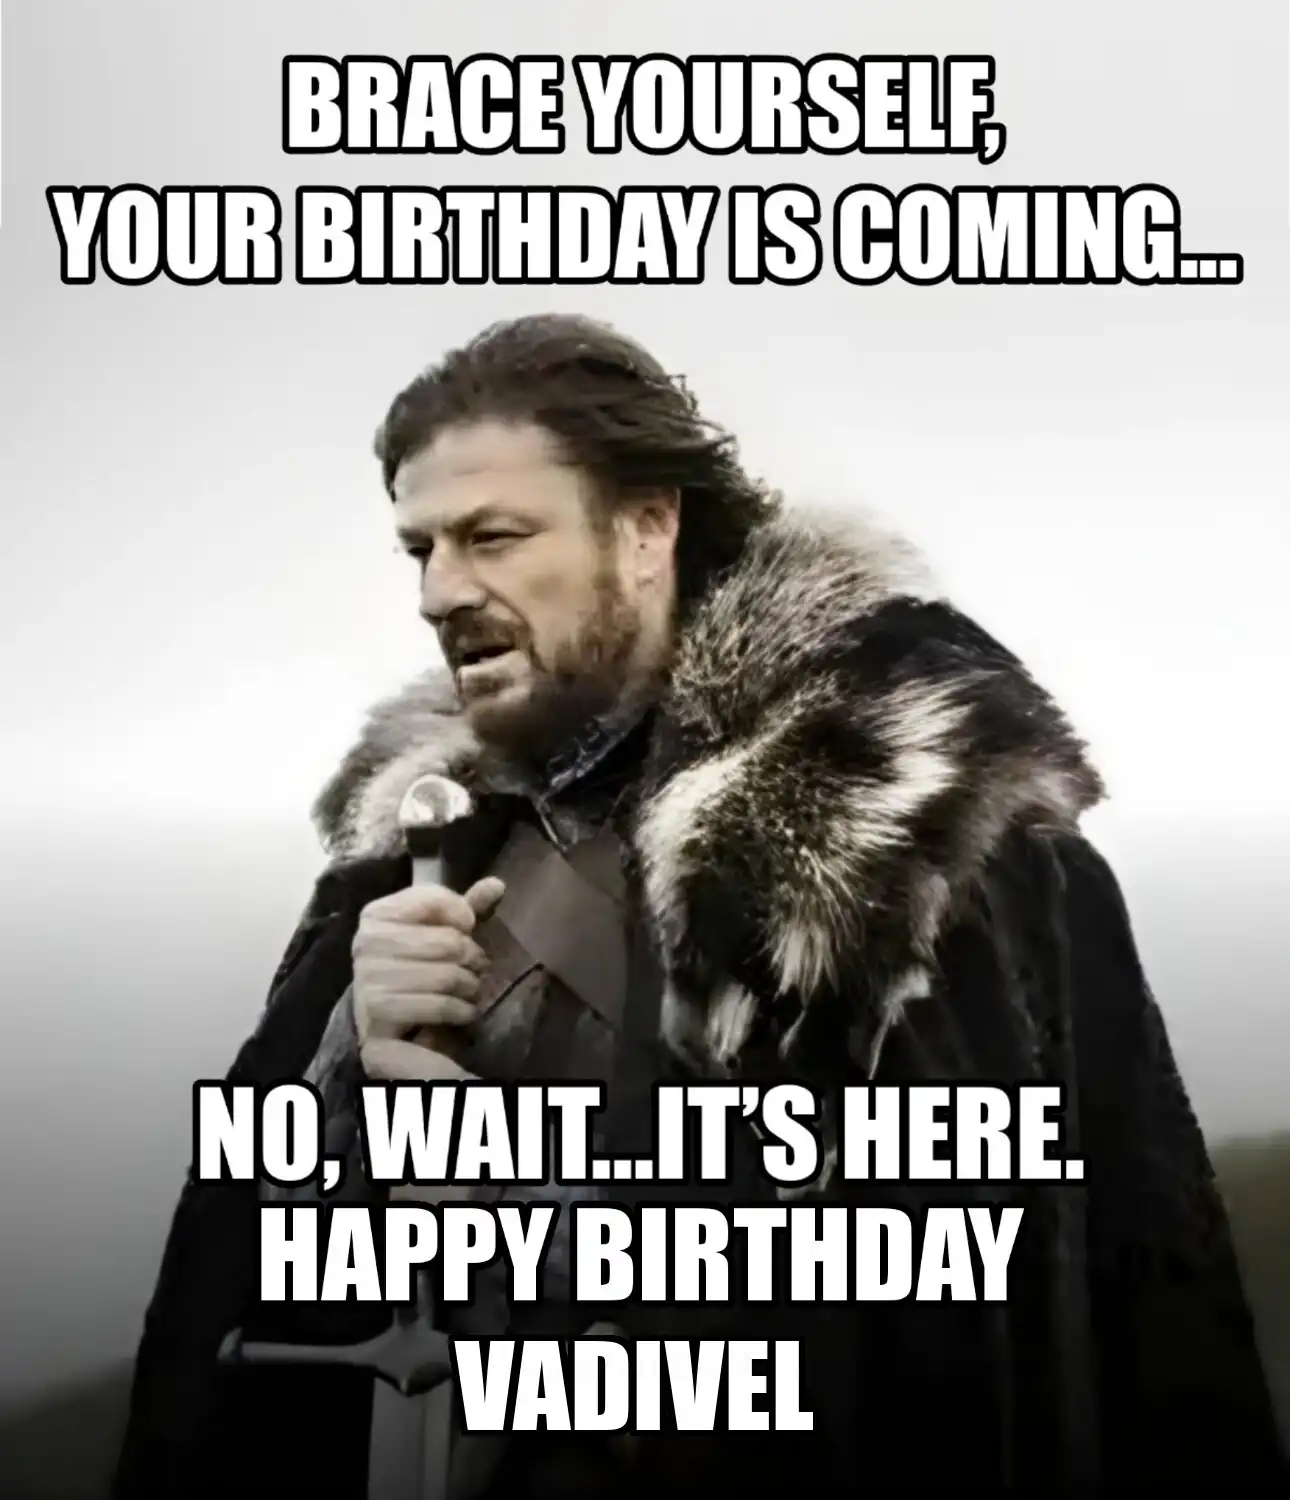 Happy Birthday Vadivel Brace Yourself Your Birthday Is Coming Meme